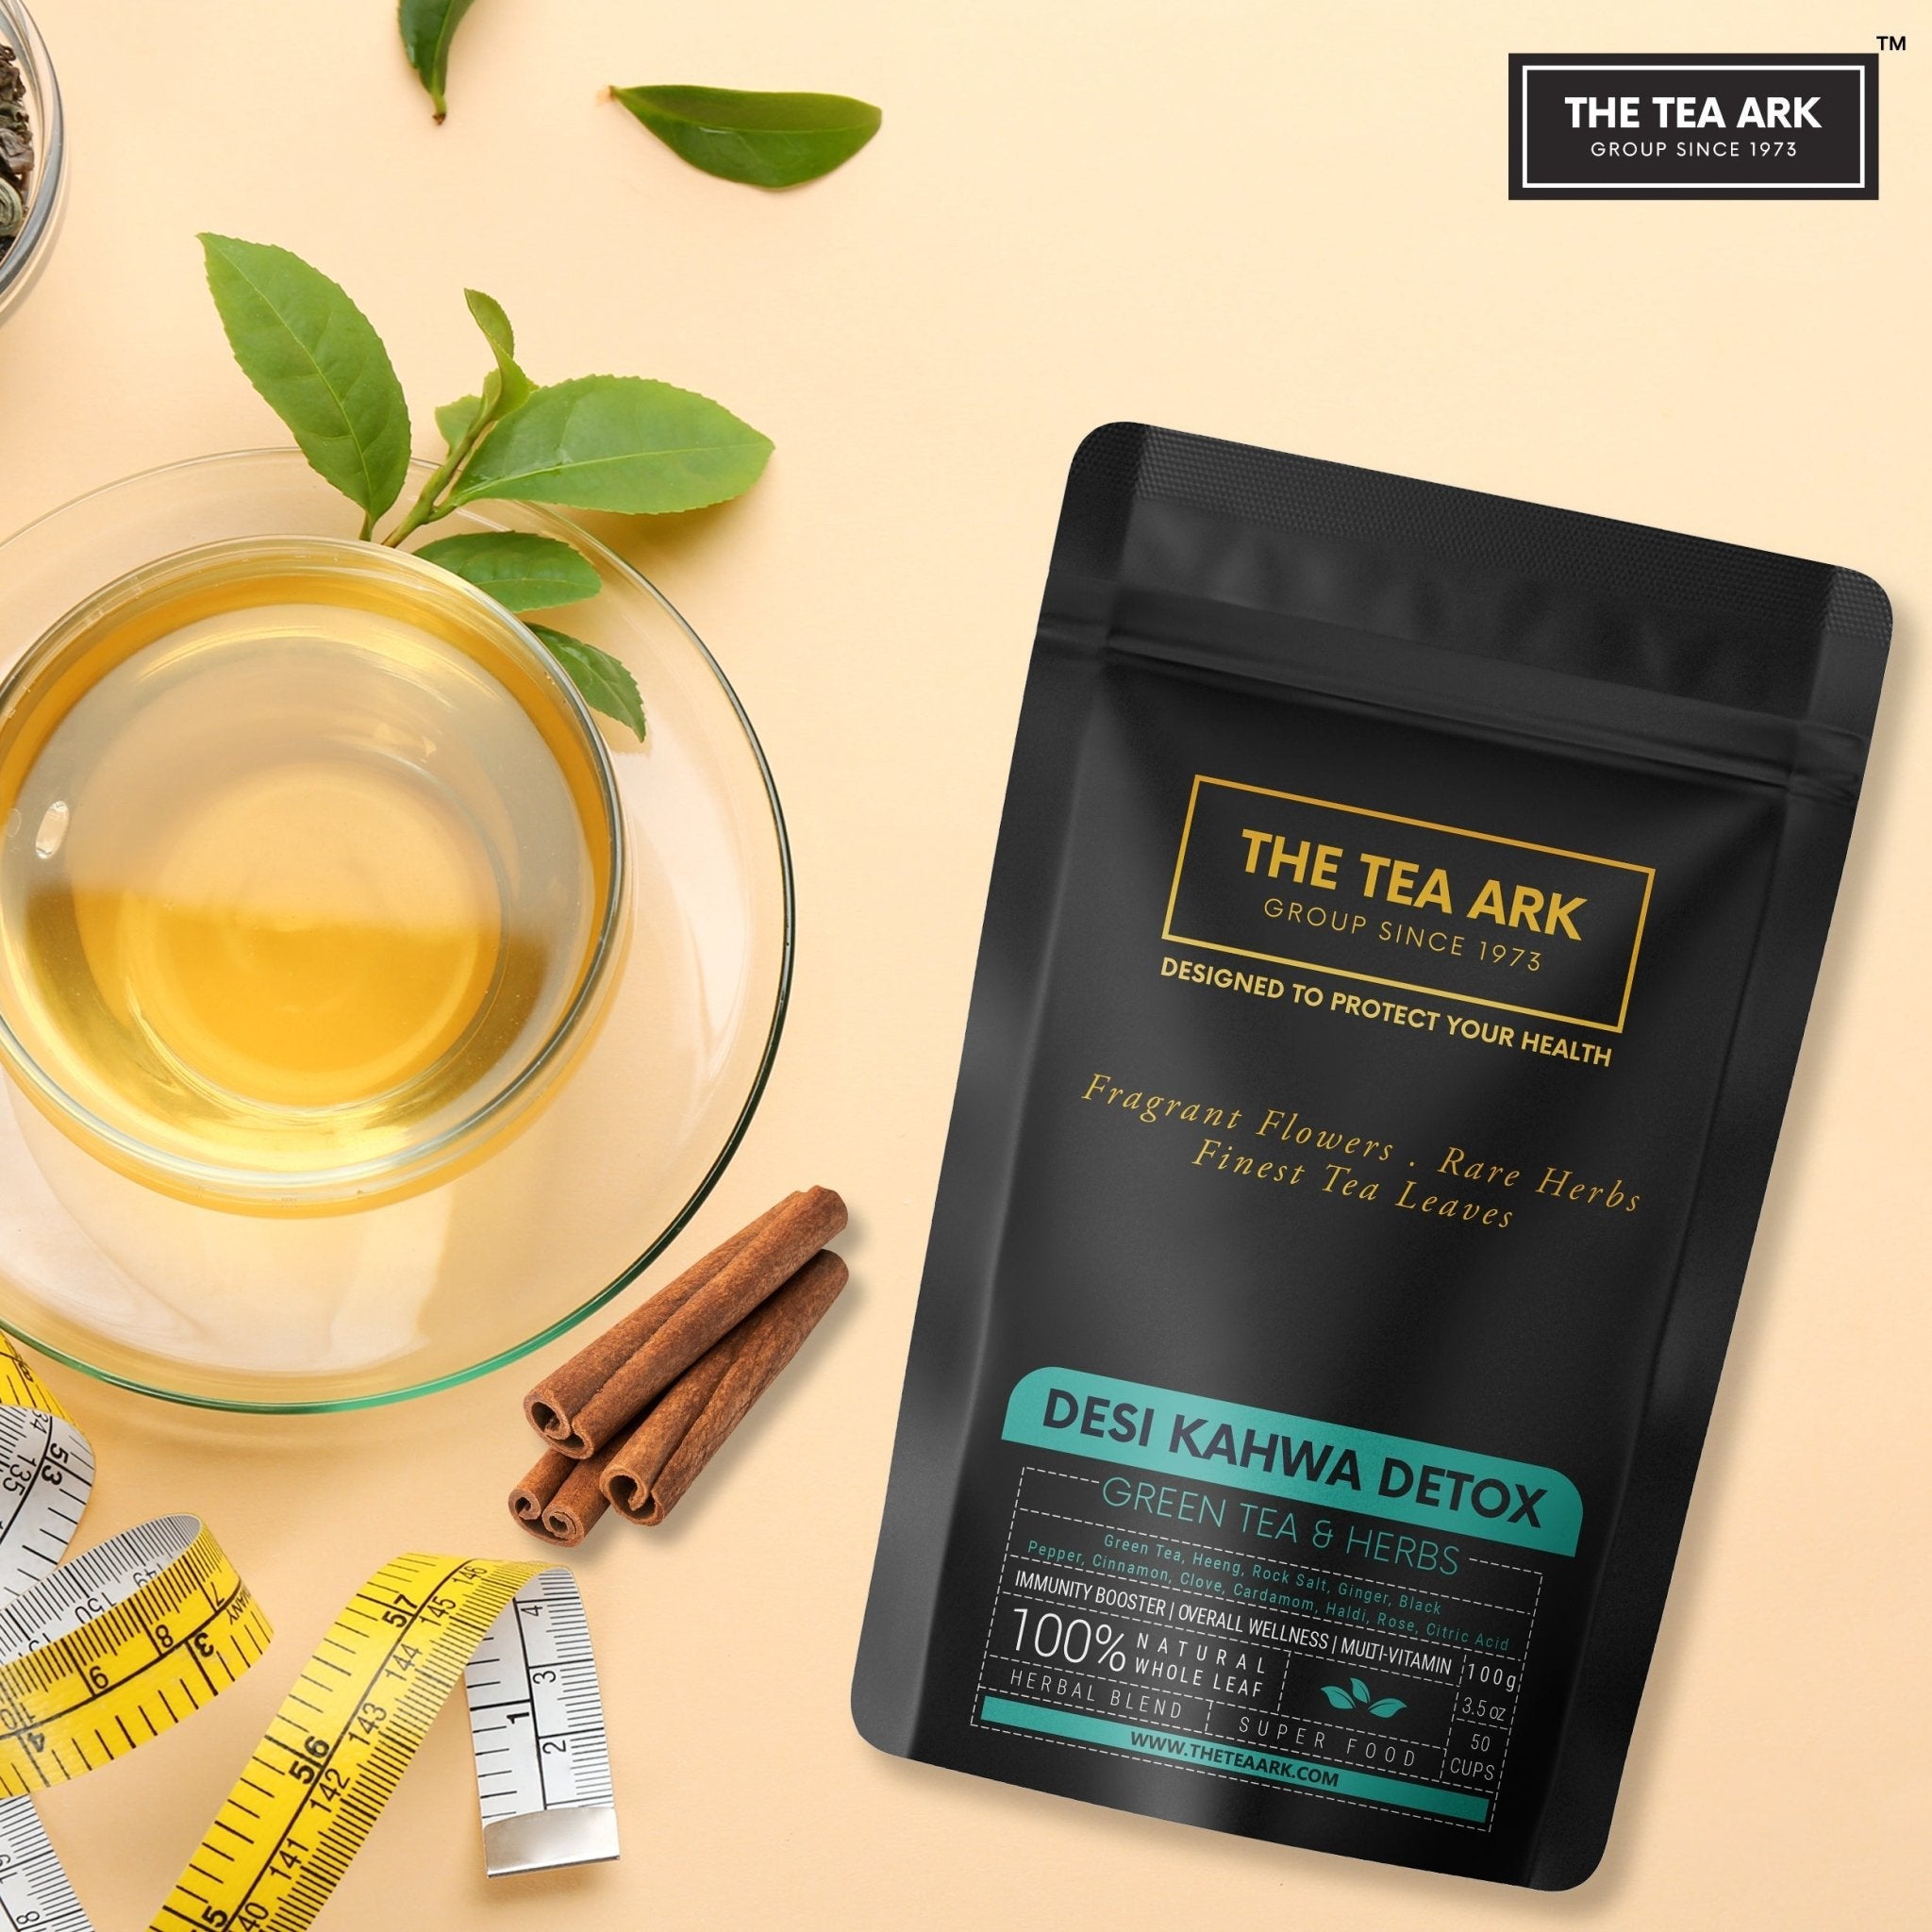 The Tea Ark Detox Desi Kahwa Green Tea (50 Cups), 100g - Inlife Pharma Private Limited